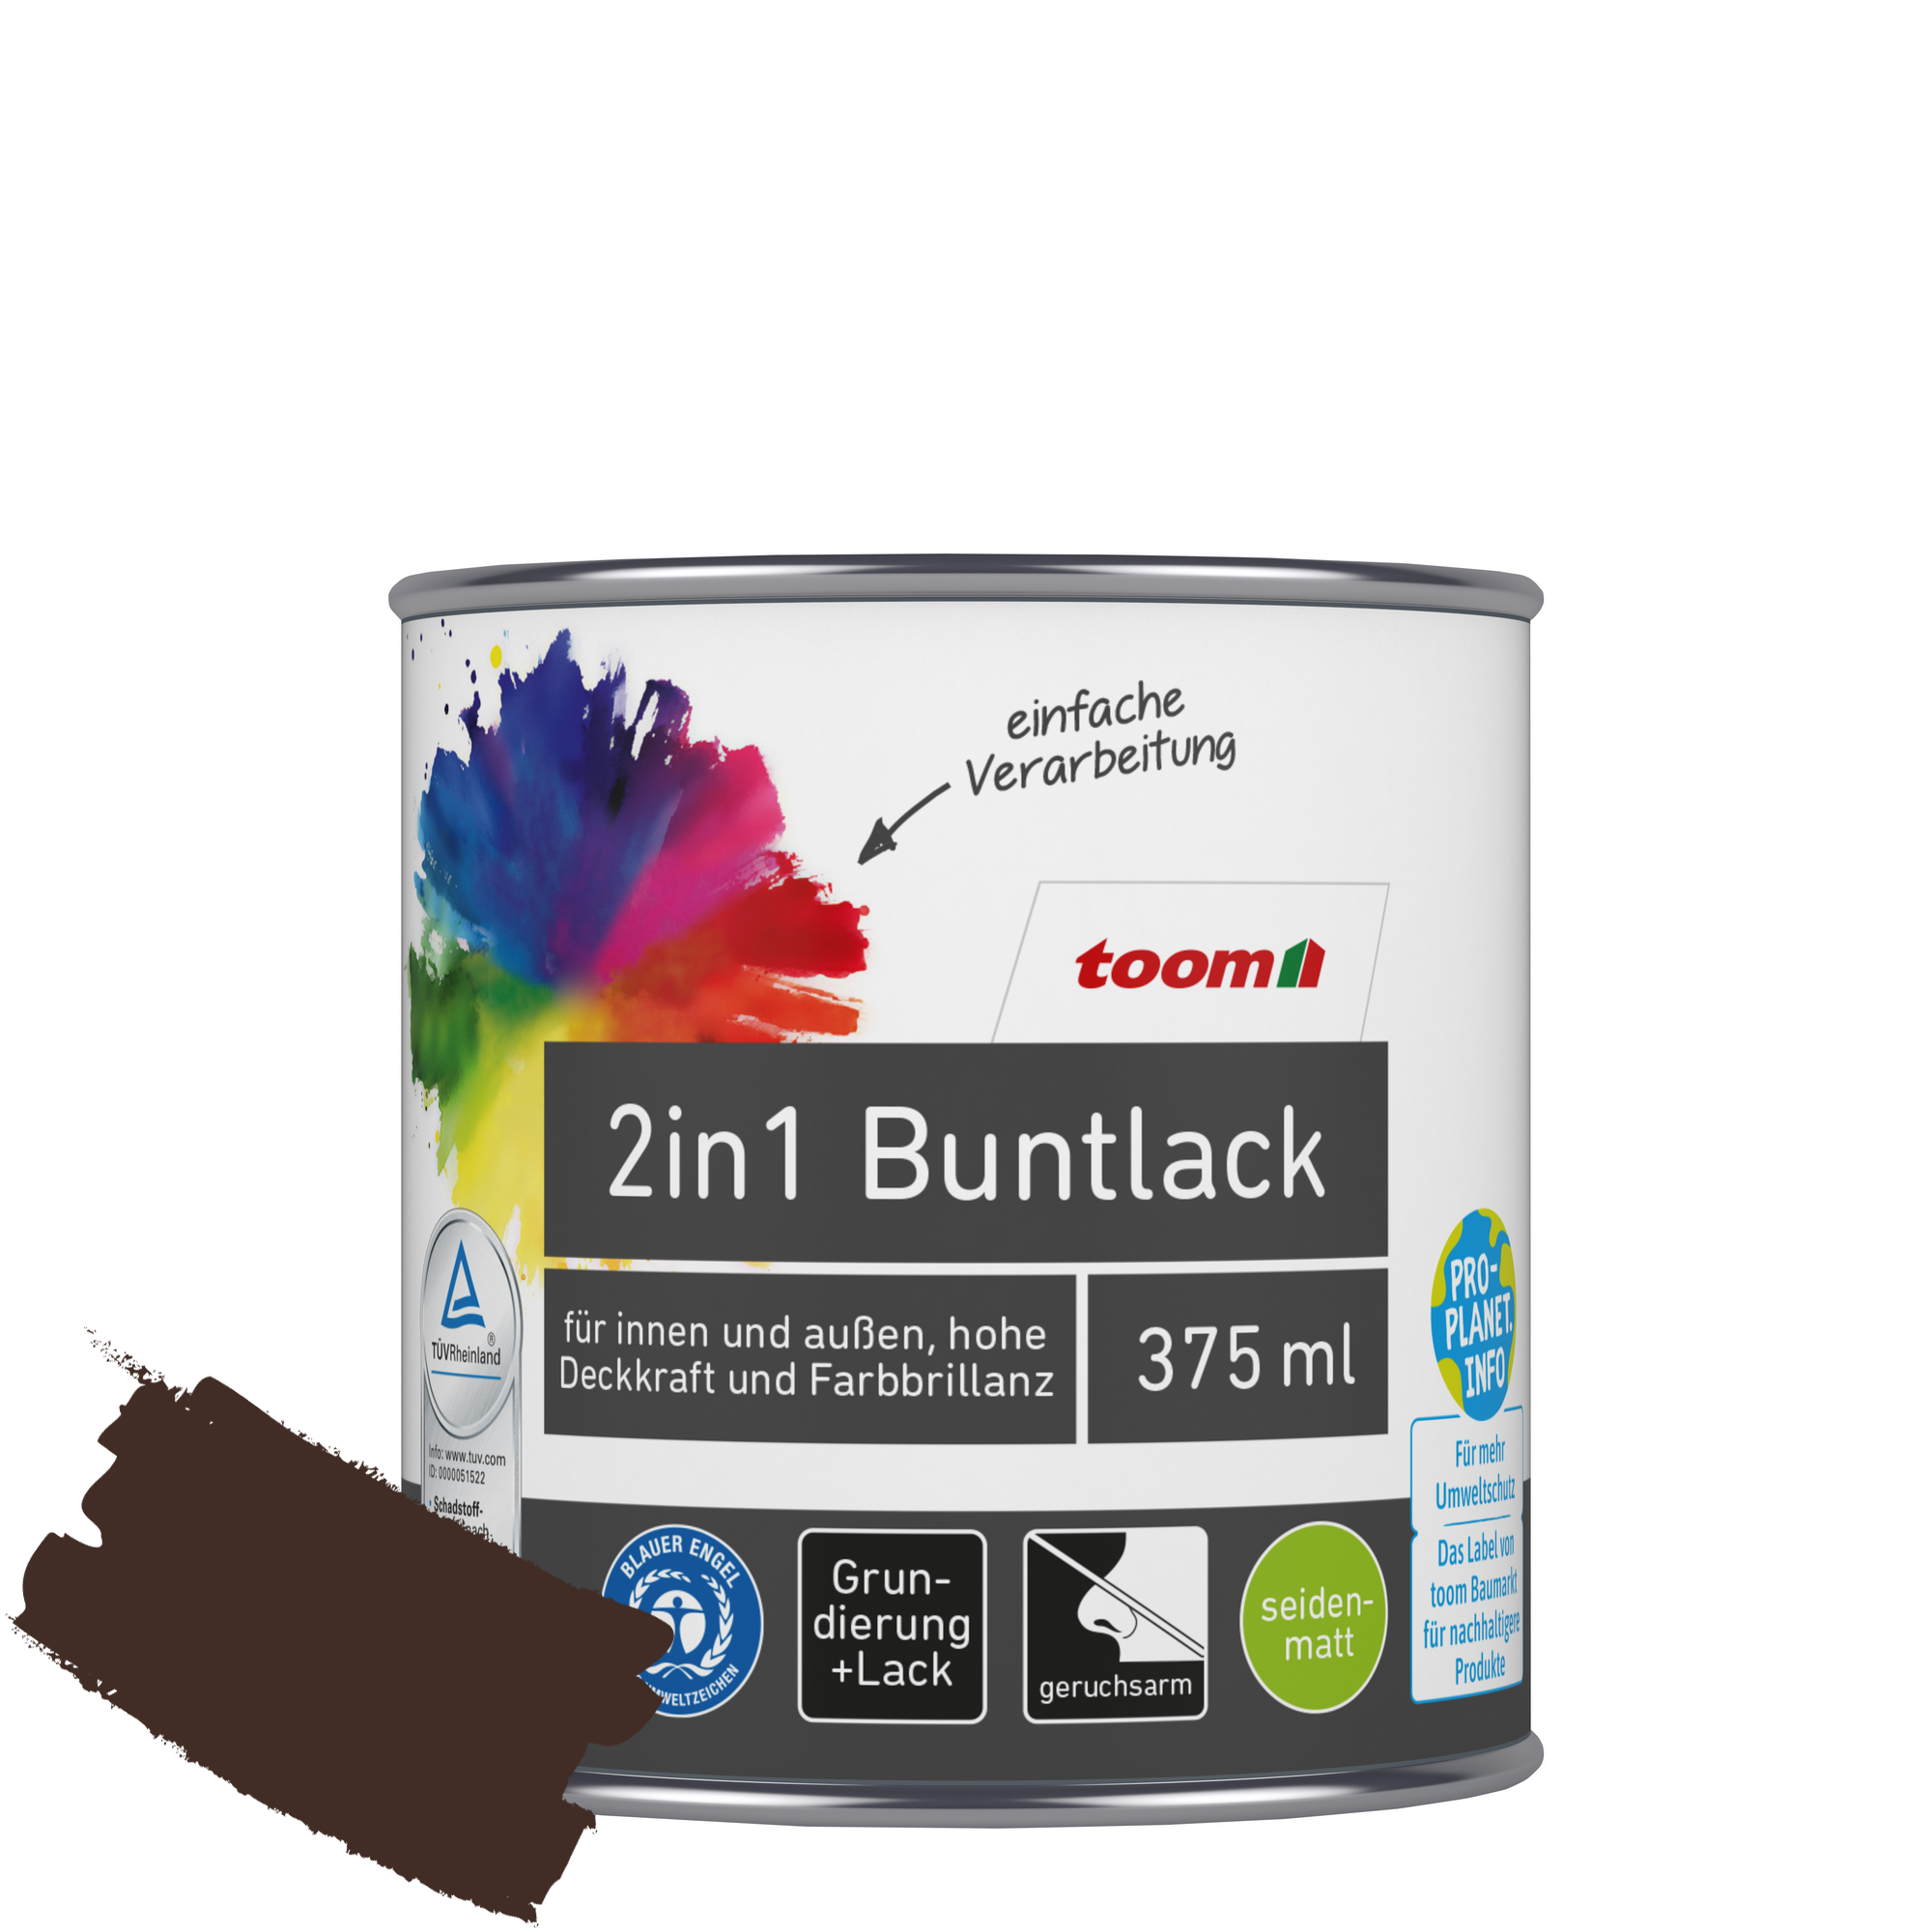 2in1 Buntlack 'Edelbraun' schokobraun seidenmatt 375 ml + product picture